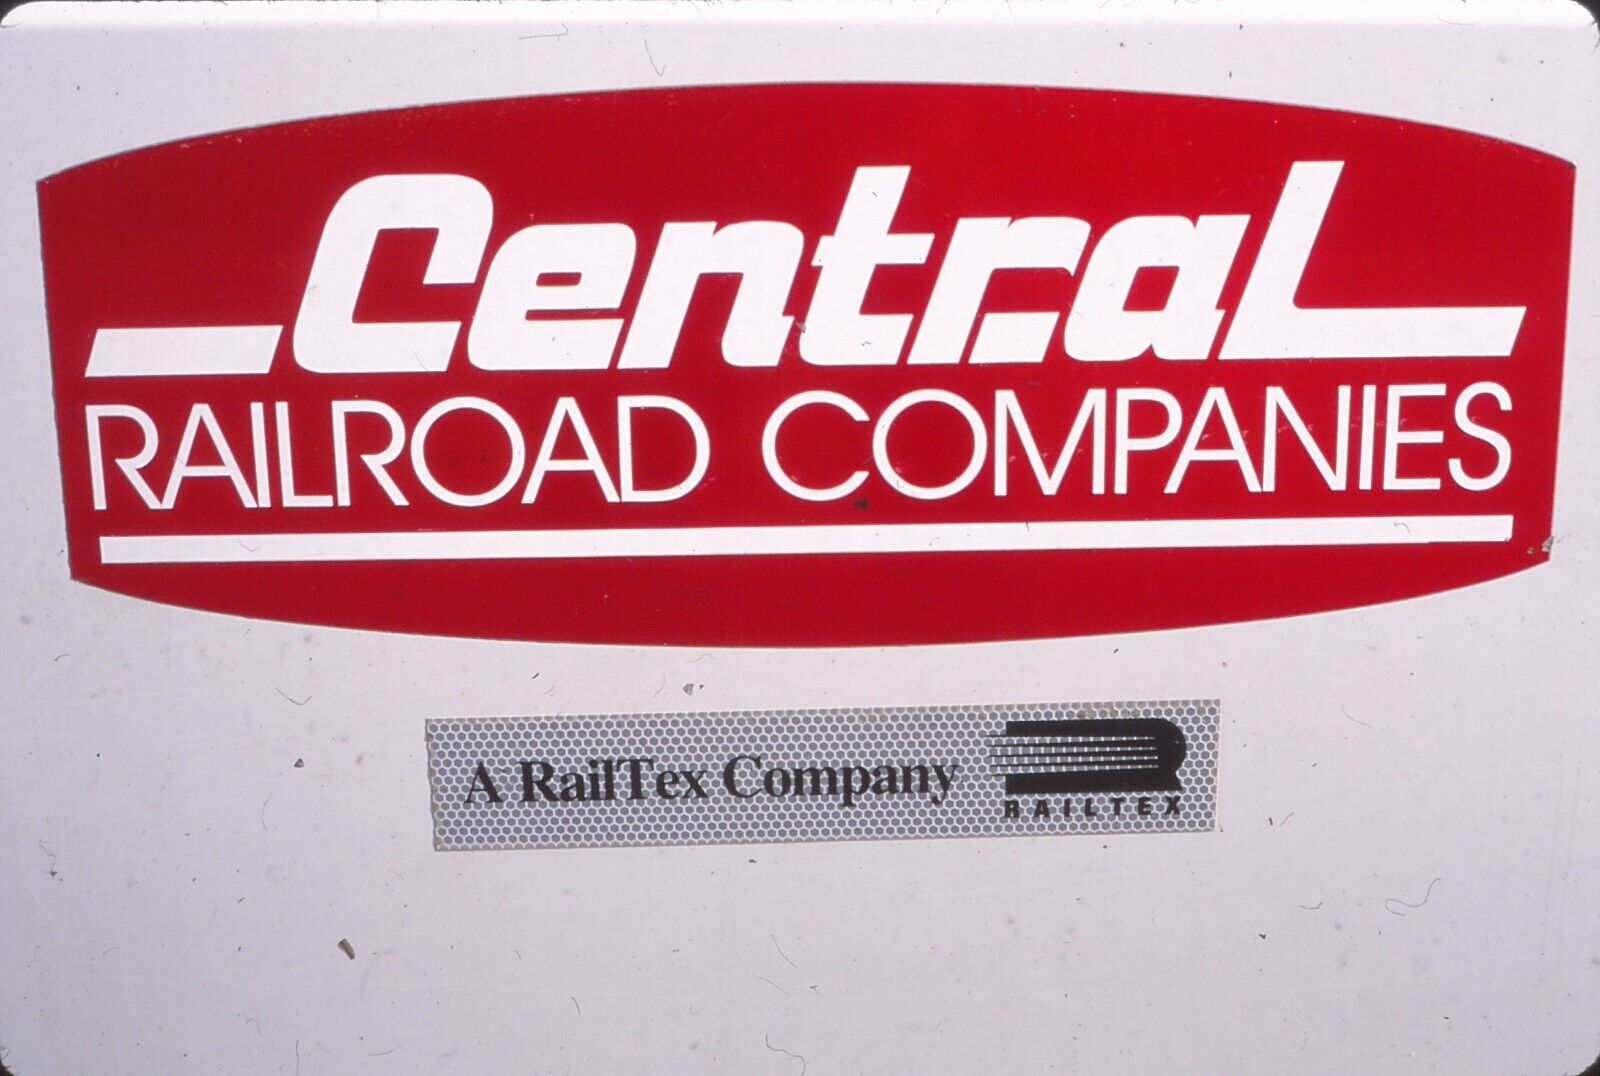 Original Fuji Railroad Slide Railtex Central Railroad Companies Logo Herald